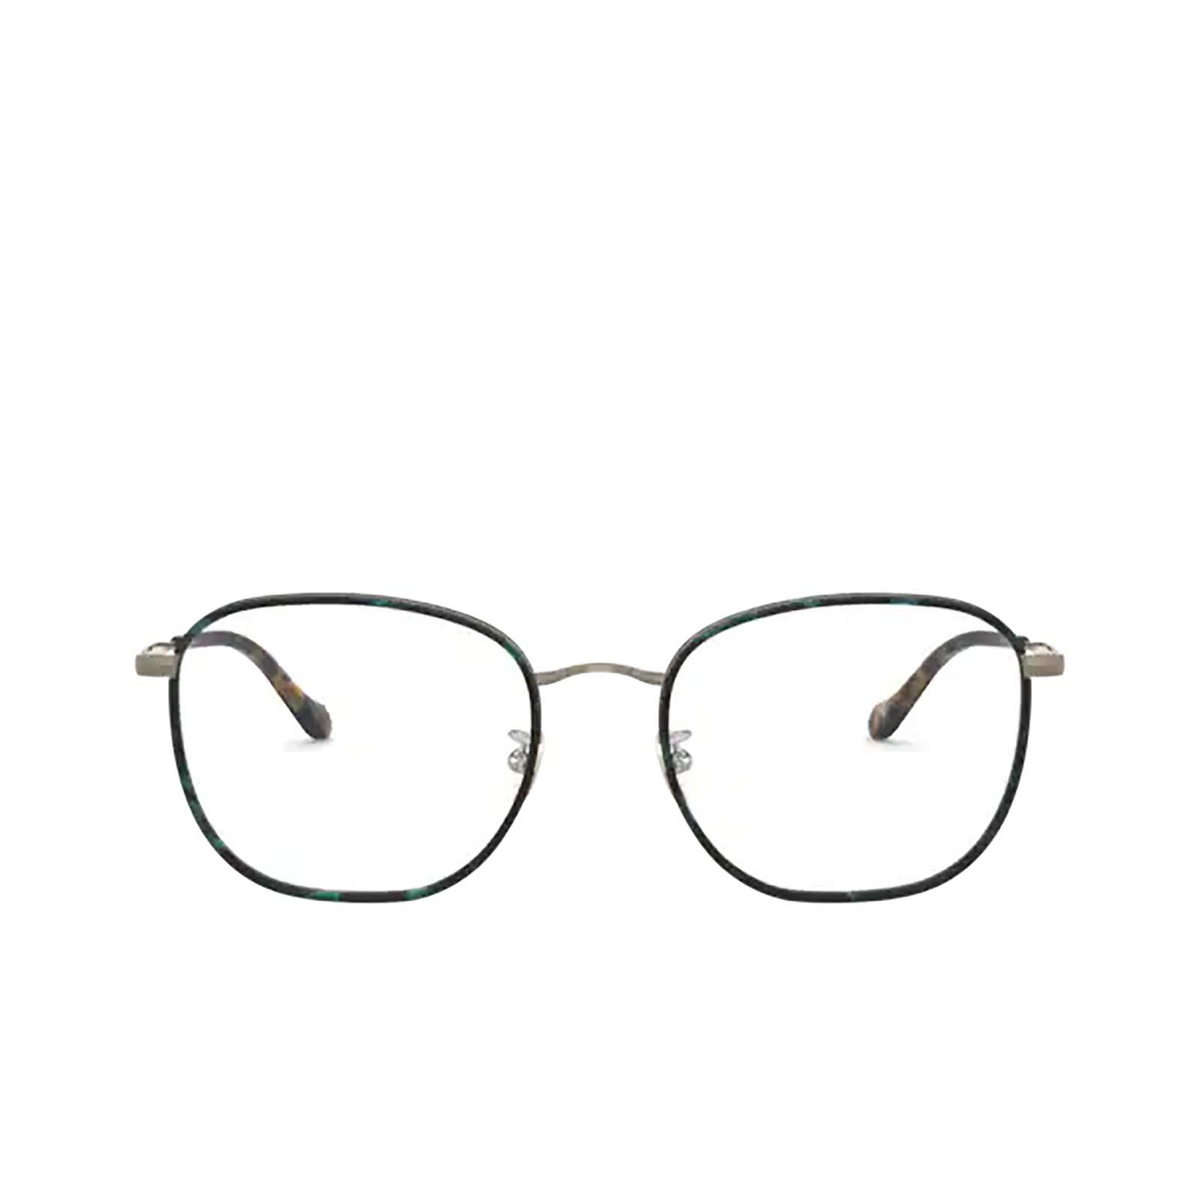 Giorgio Armani® Square Eyeglasses: AR5105J color Blue Havana / Brushed Gold 3247 - front view.